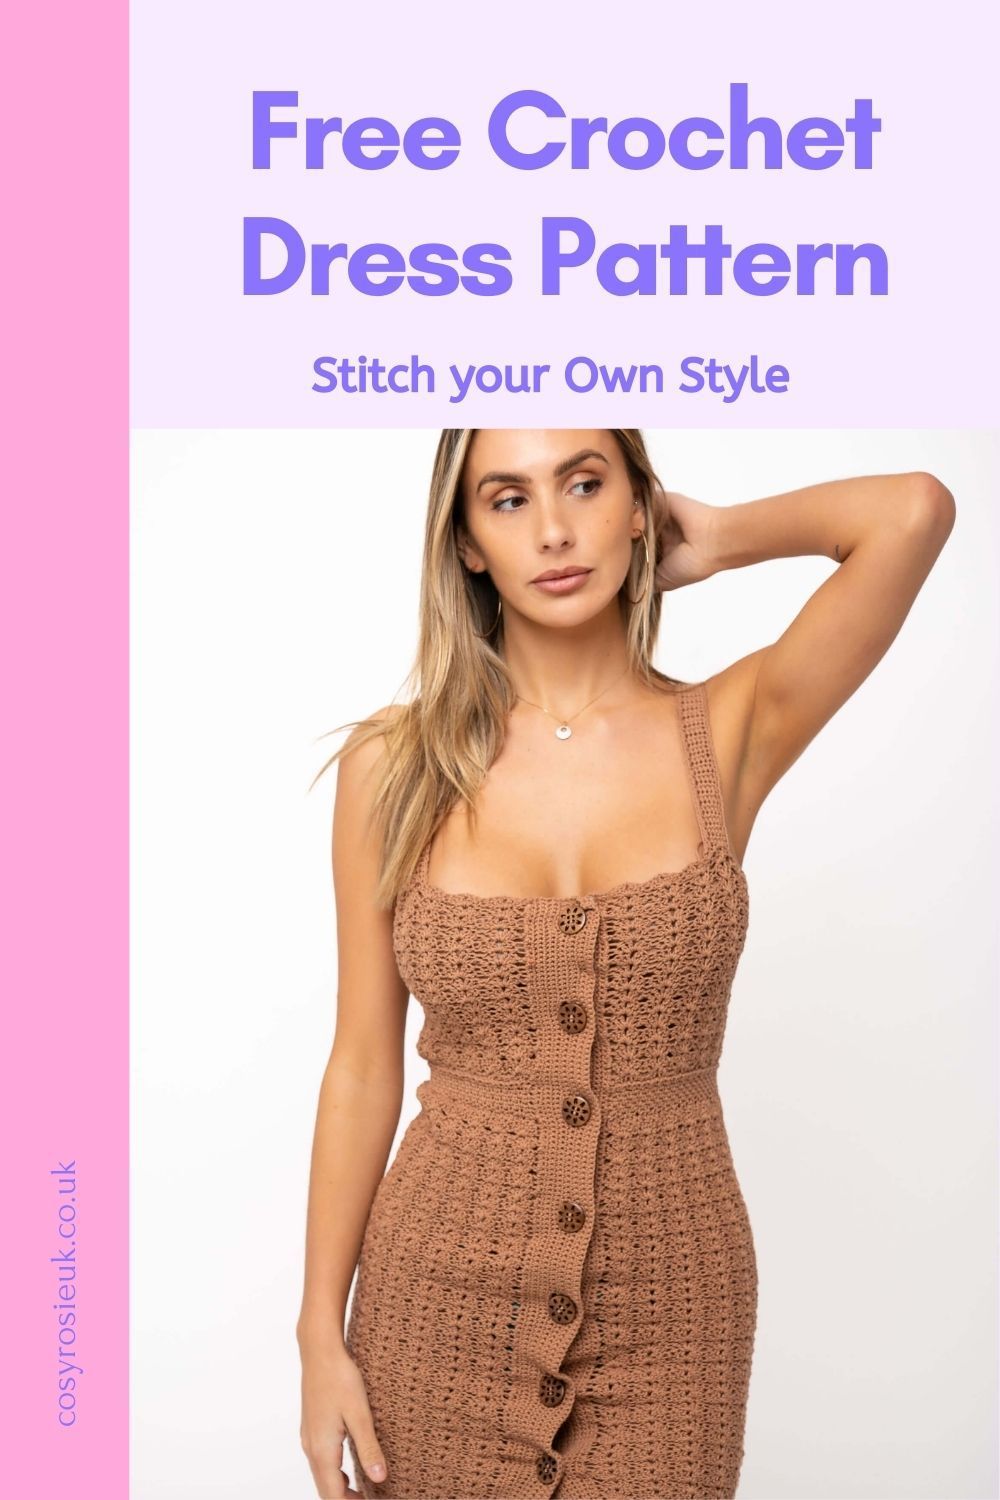 Free Crochet Dress pattern for summer